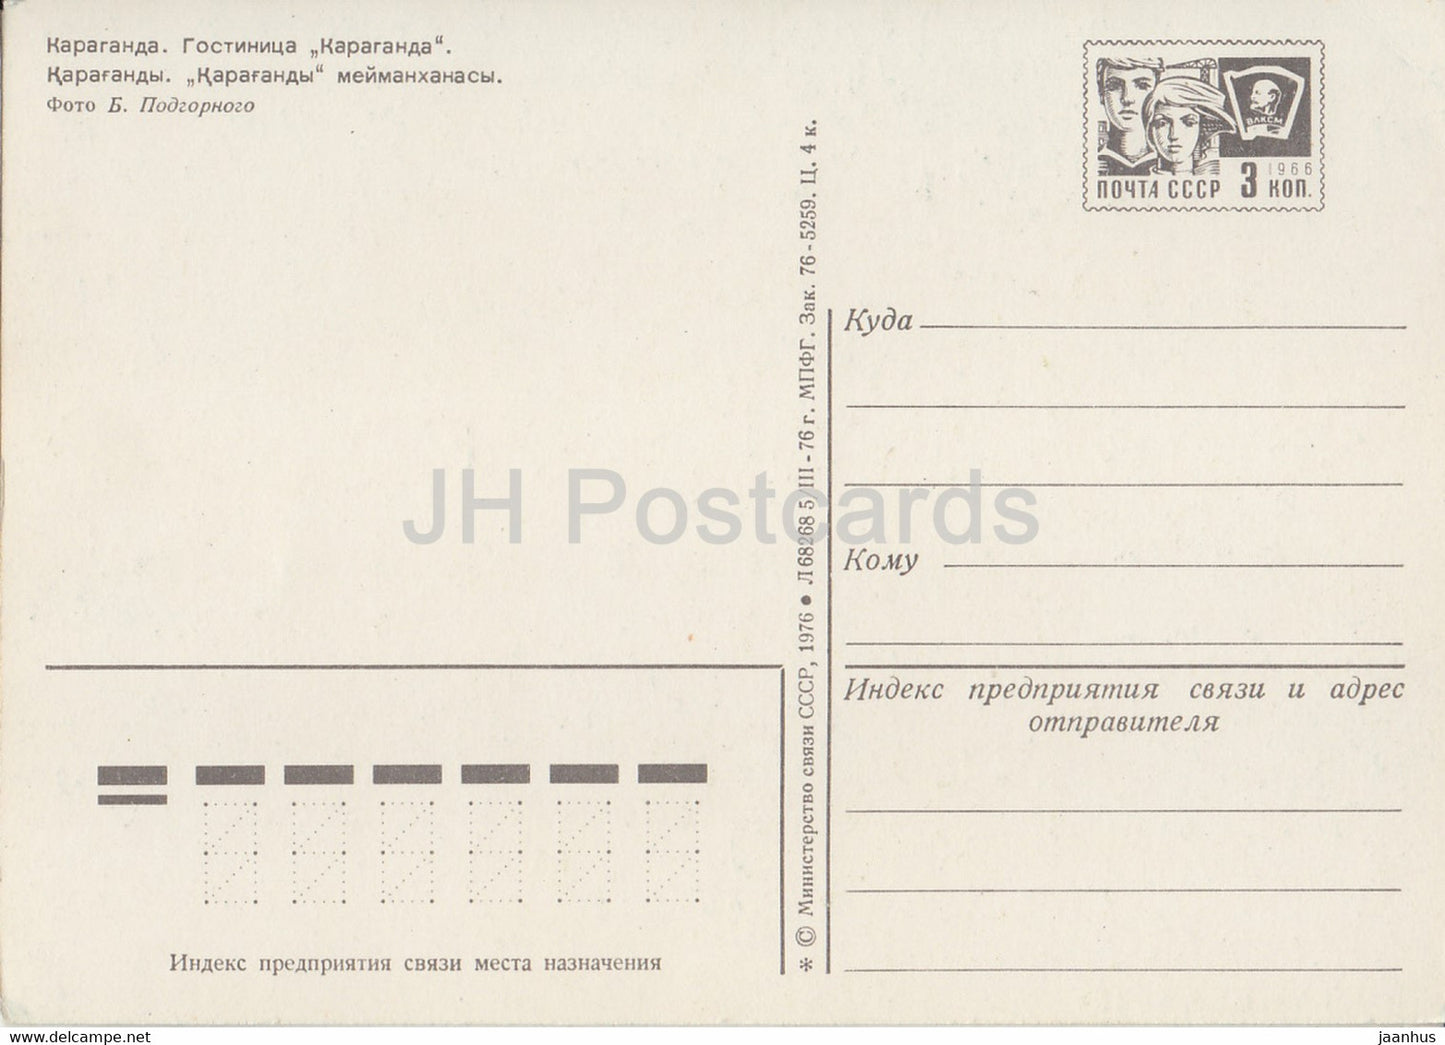 Karaganda - Karagandy - hotel - bus - postal stationery - 1976 - Kazakhstan USSR - unused